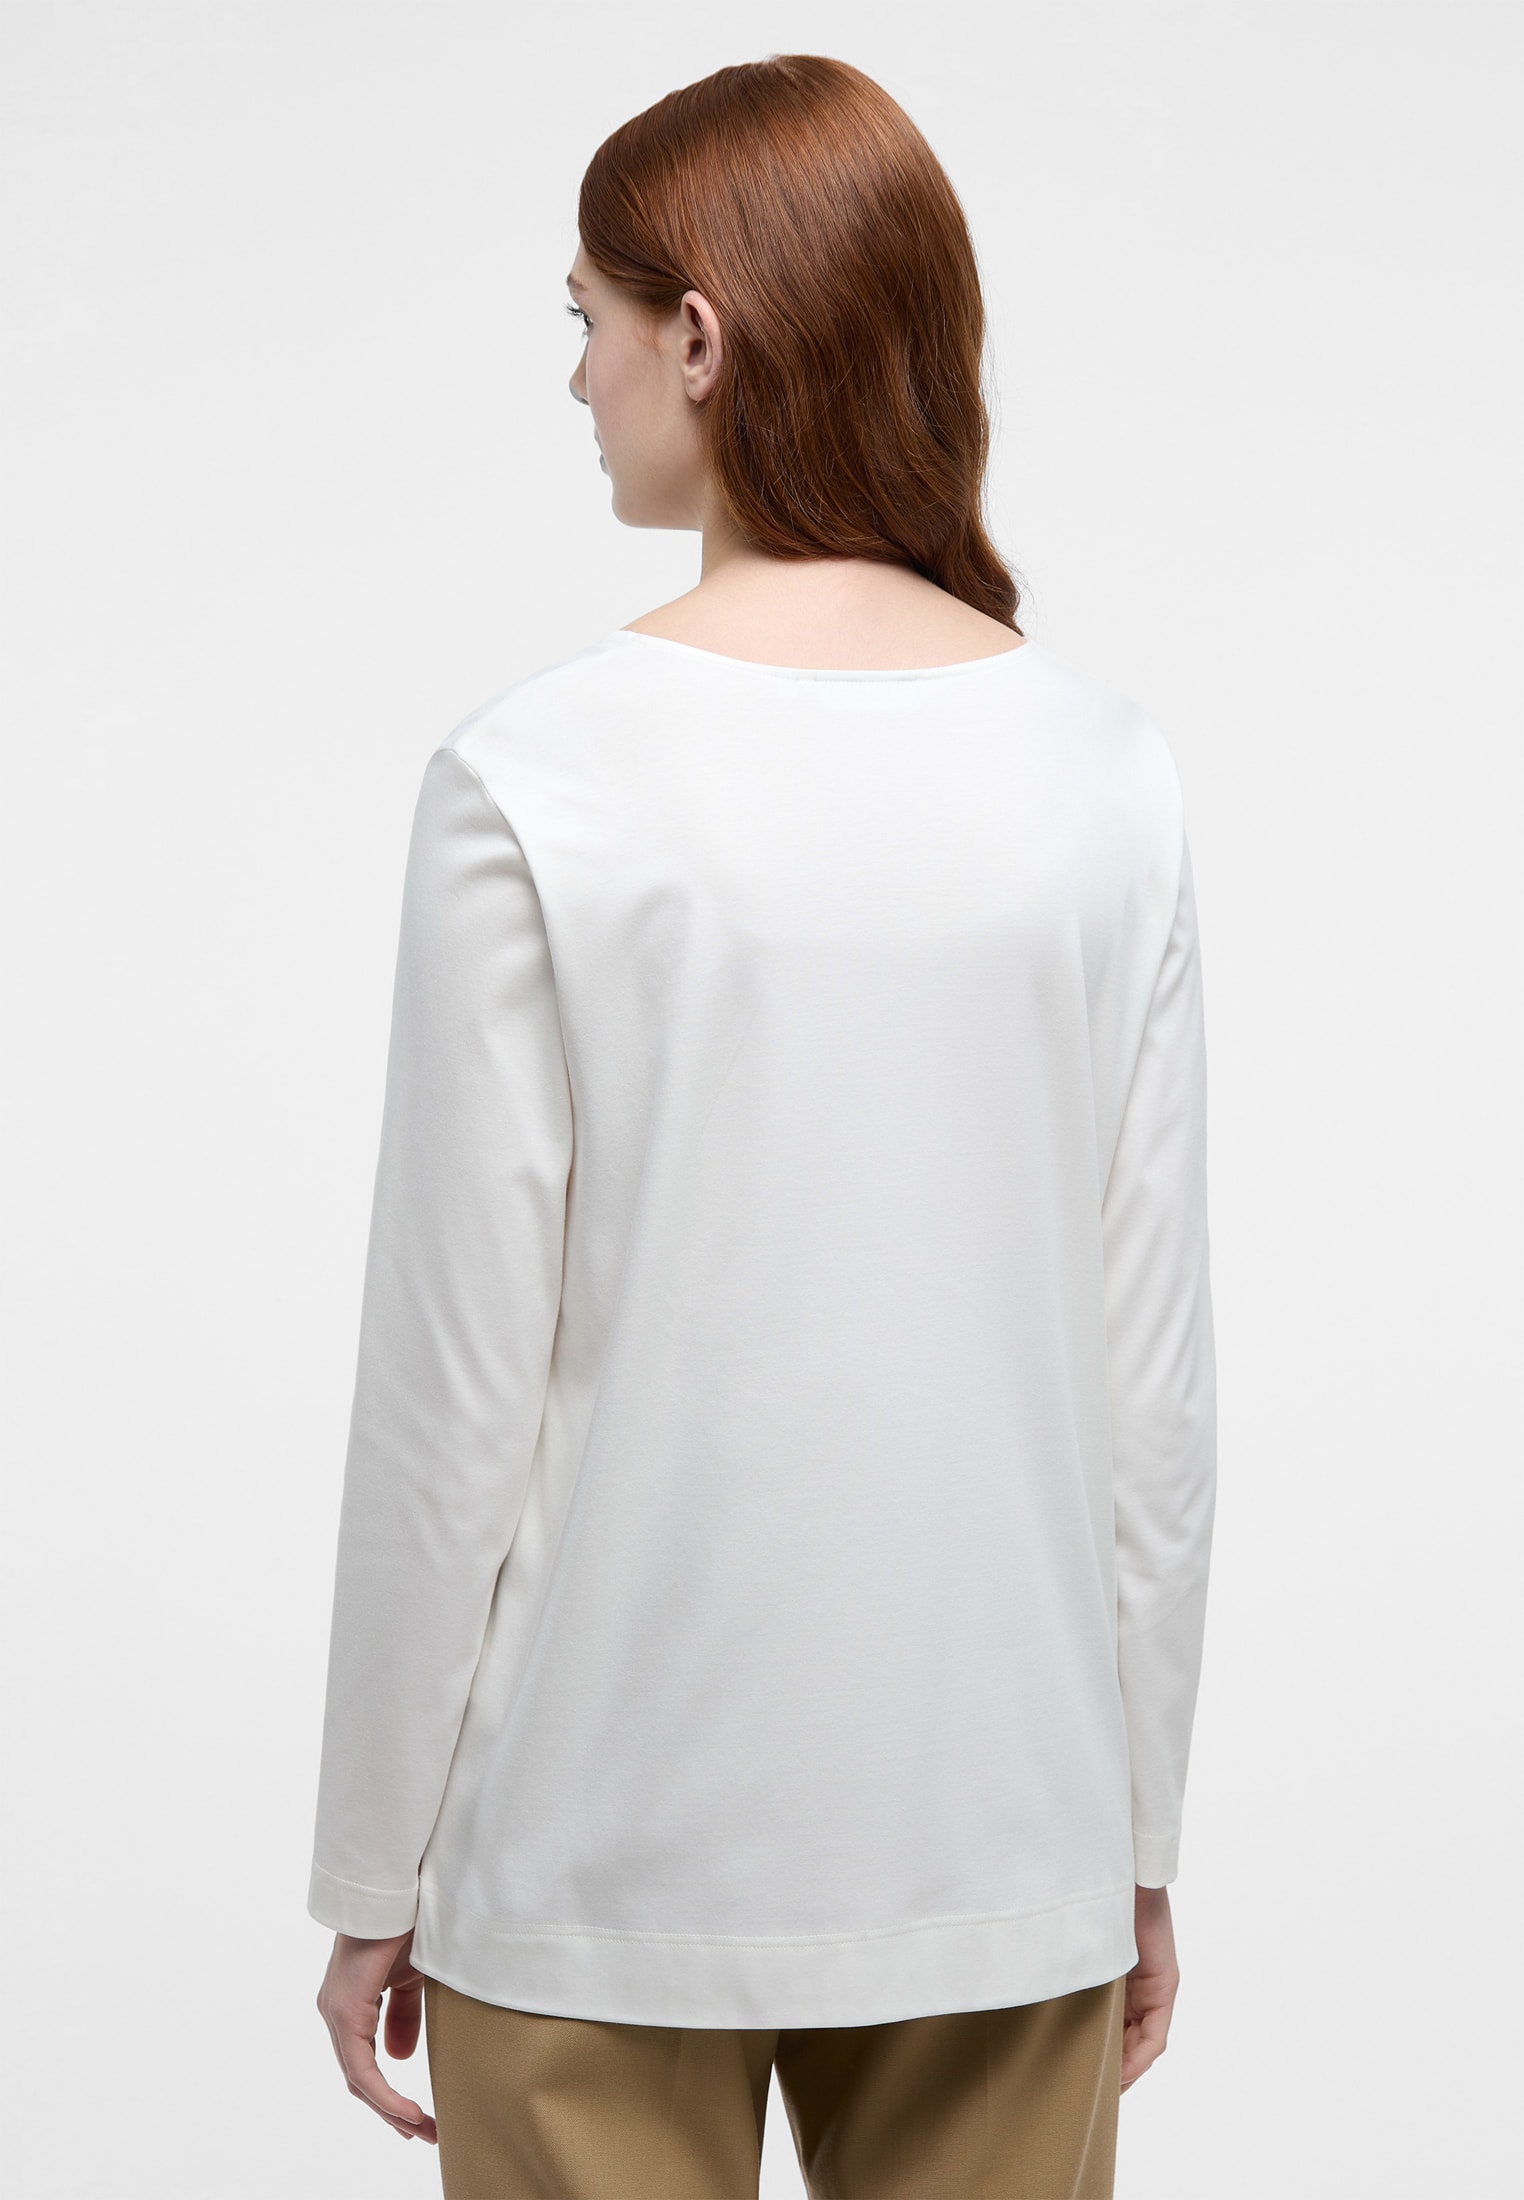 off-white 46 off-white Langarm | | 2BL04252-00-02-46-1/1 Viscose | unifarben Bluse | Shirt in